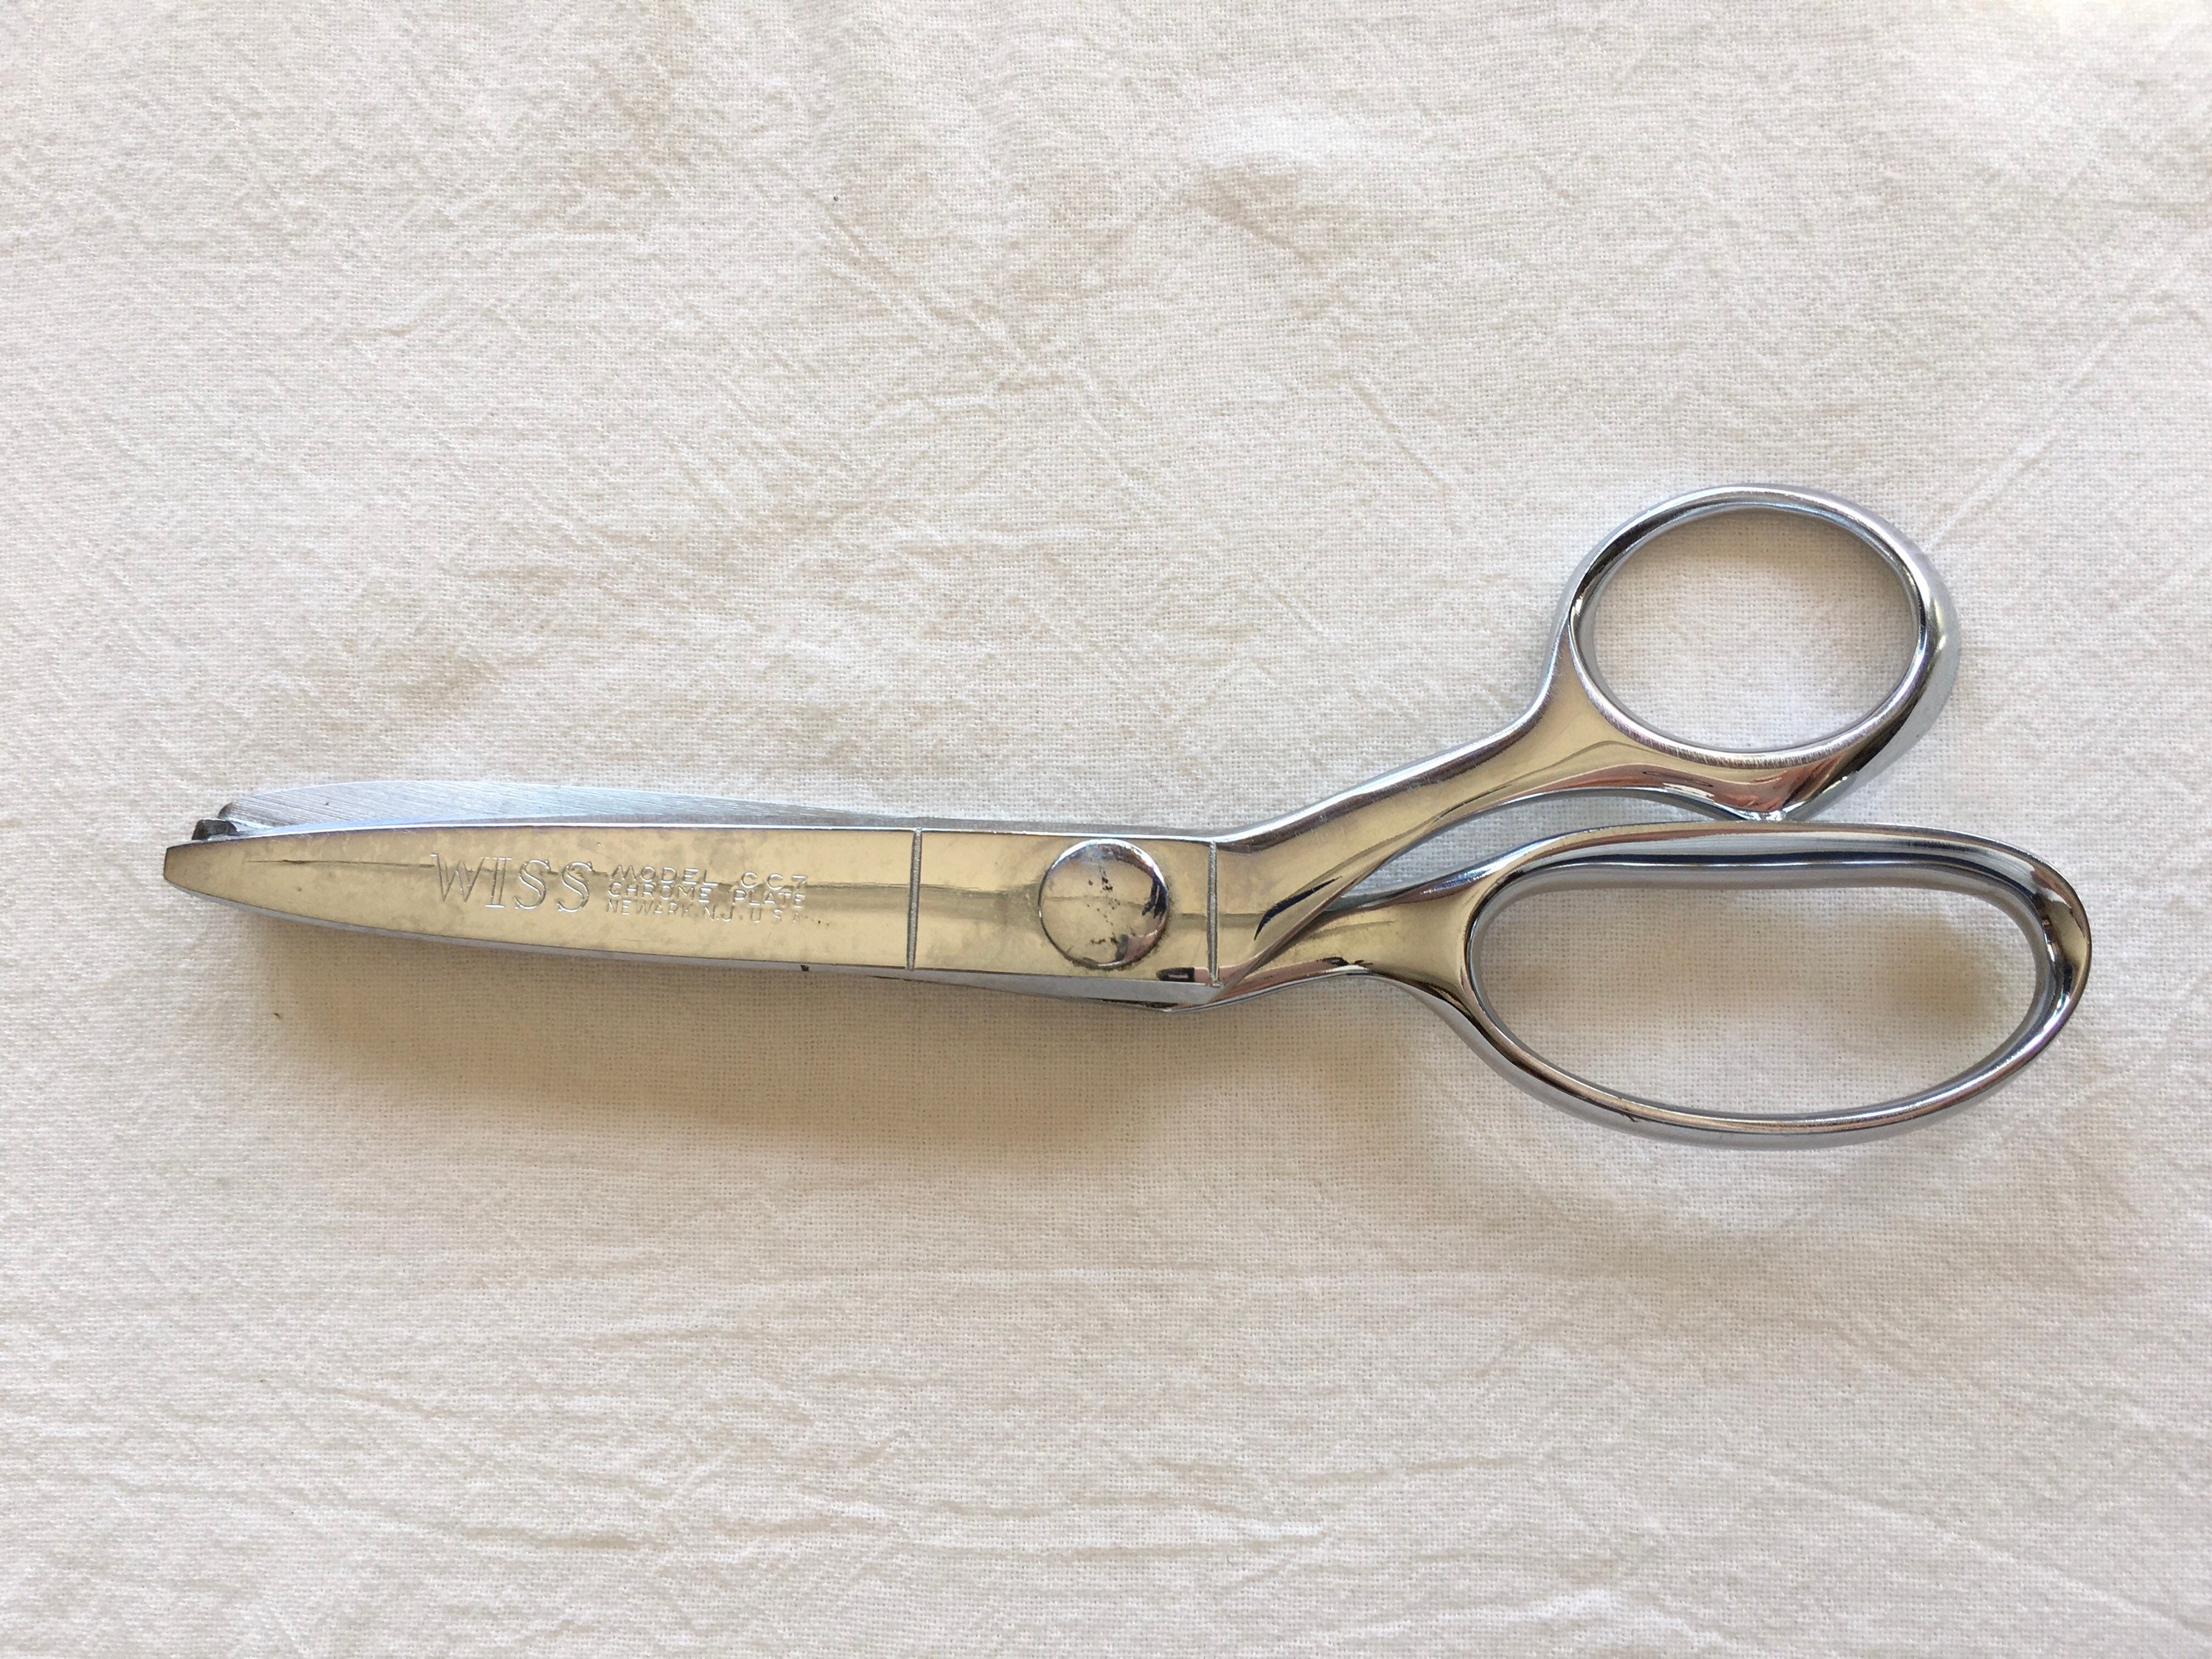 Scissor WISS W20 10-3/8-inch INLAID Heavy Duty Industrial Shears